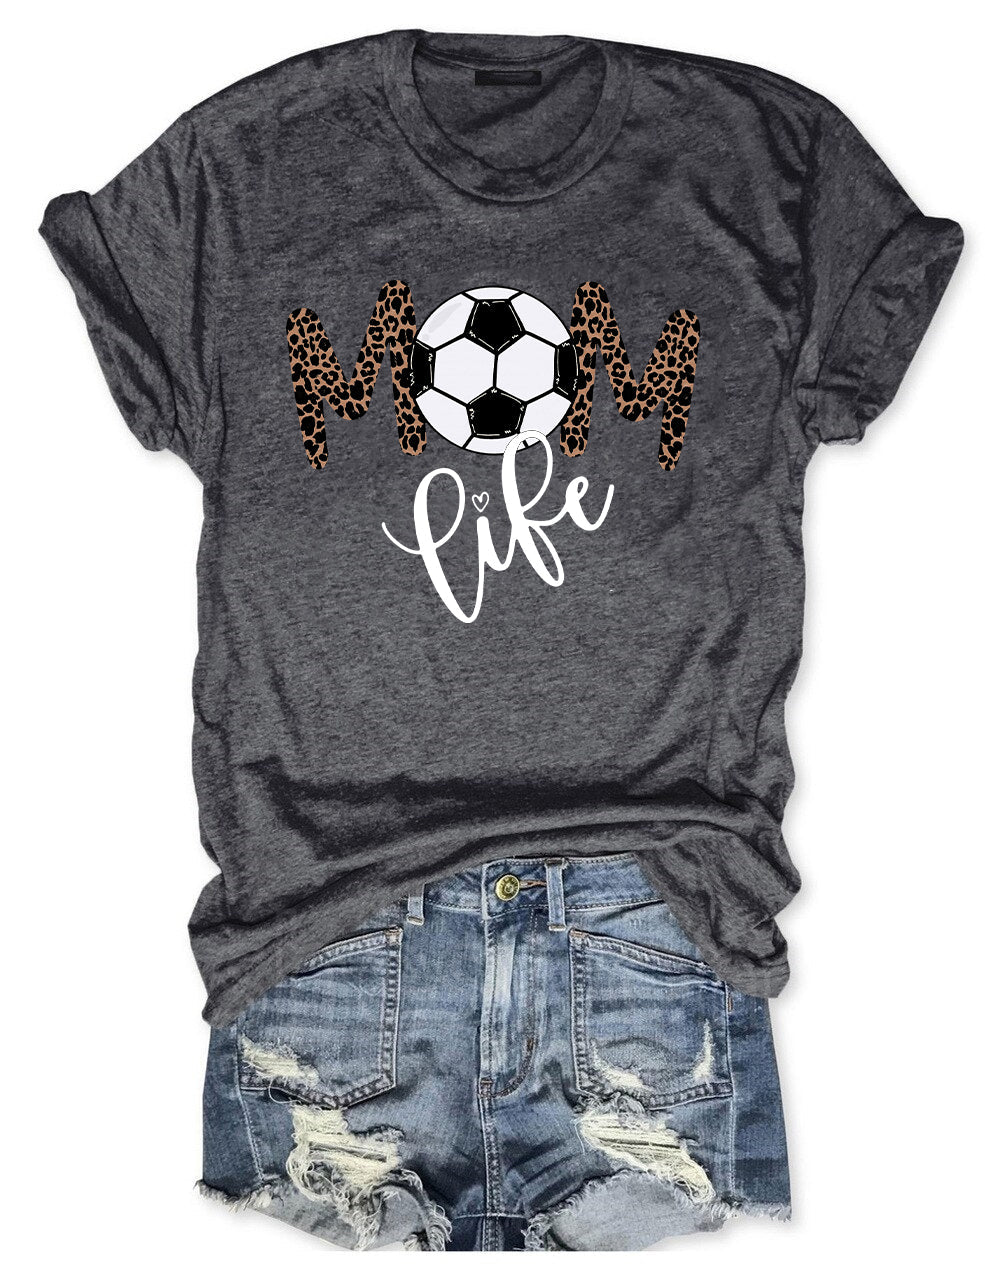 Soccer Mom Life T-shirt